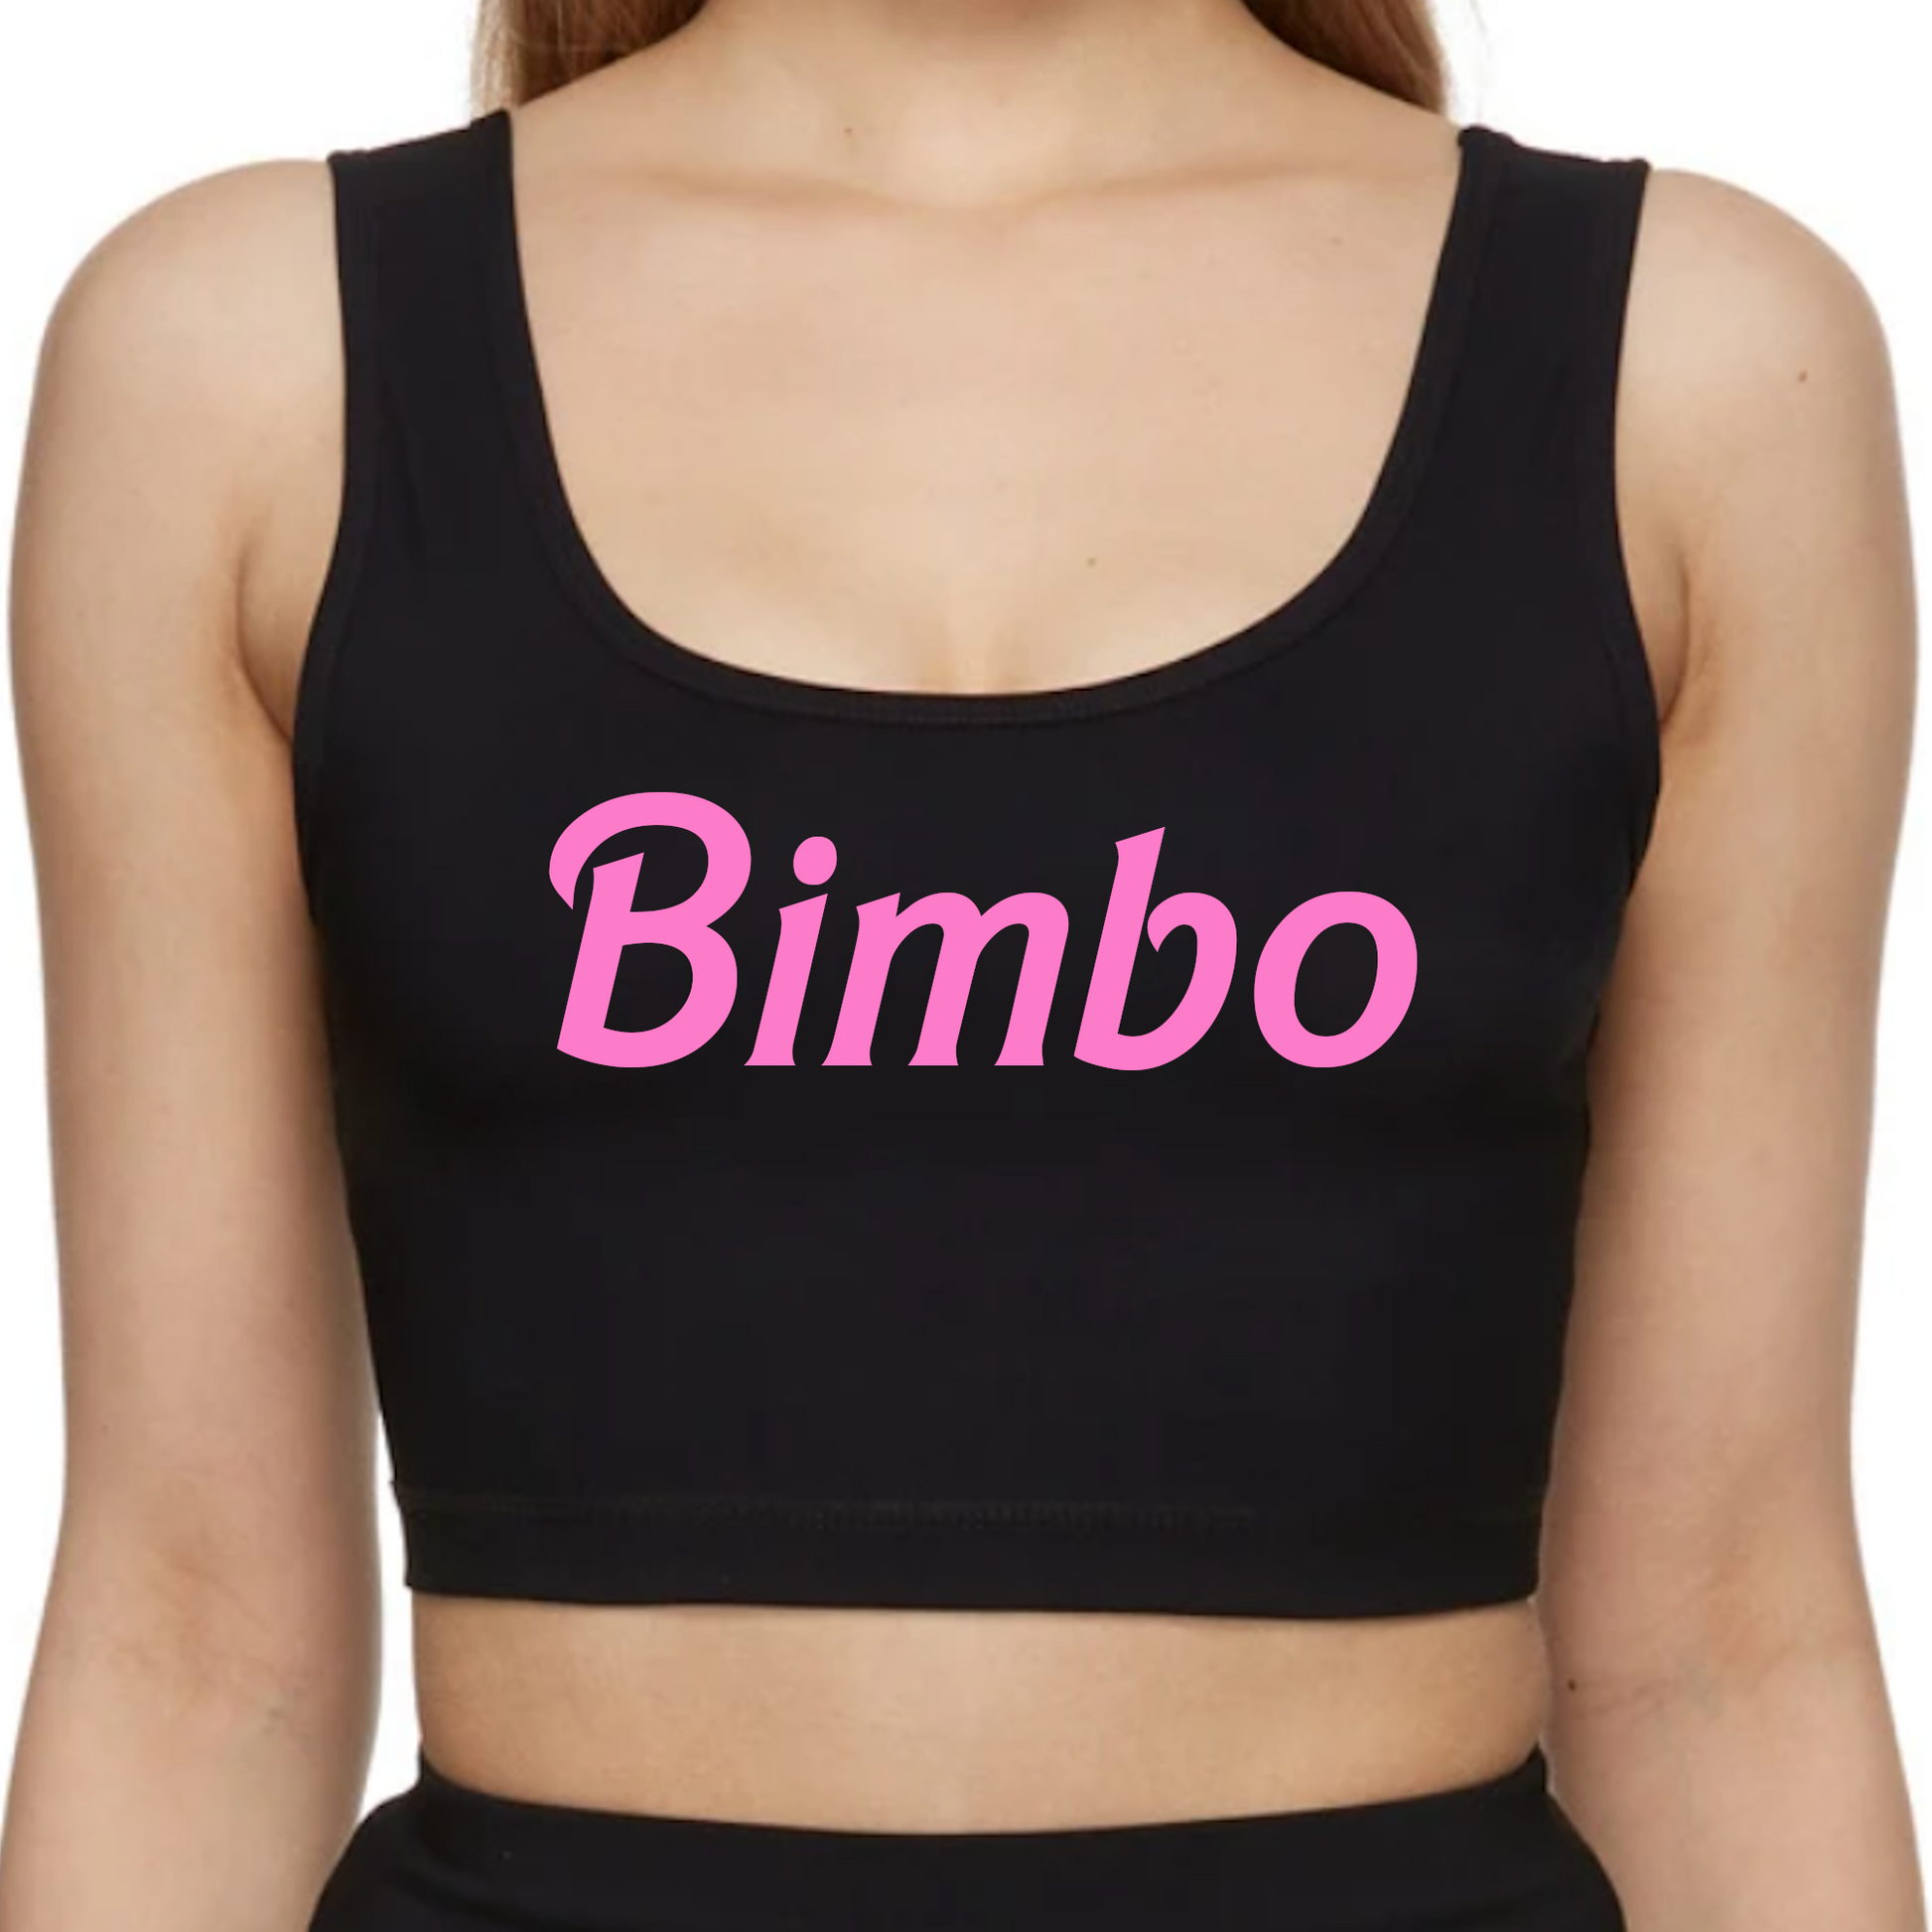 Bimbo Crop Top for Sluts